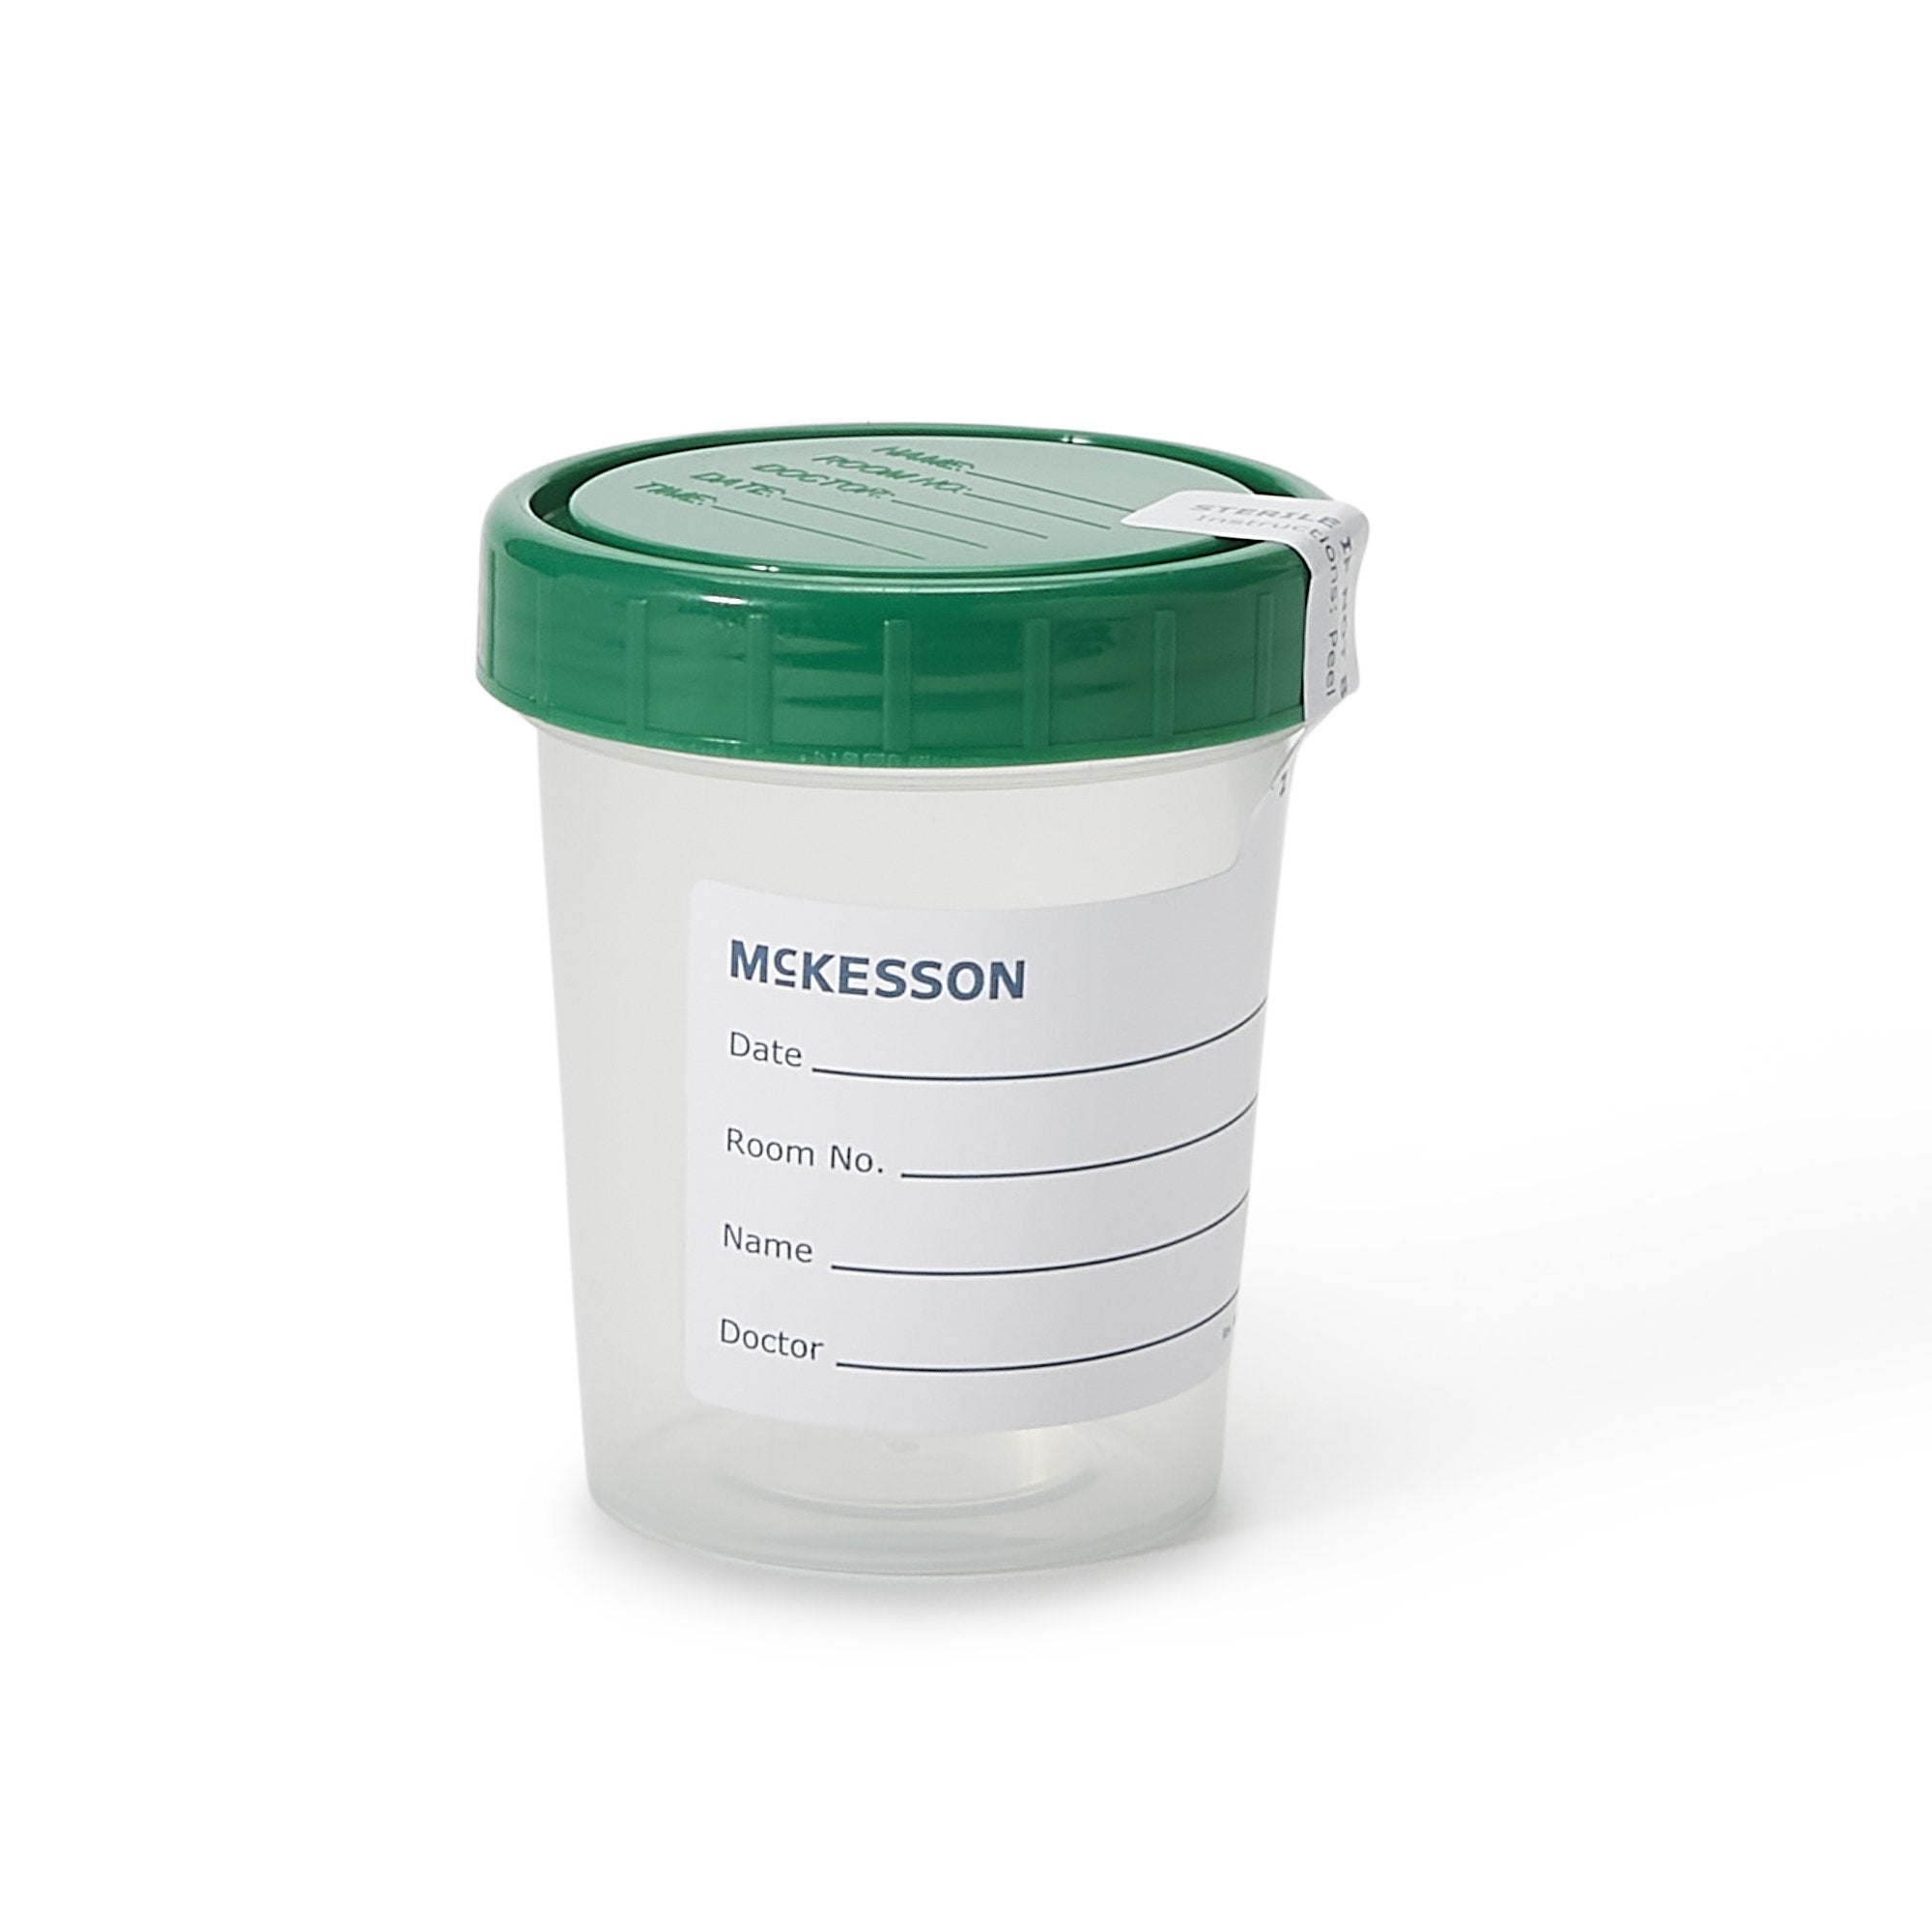 Specimen Container McKesson 120 mL (4 oz.) Screw Cap Sterile Inside Only